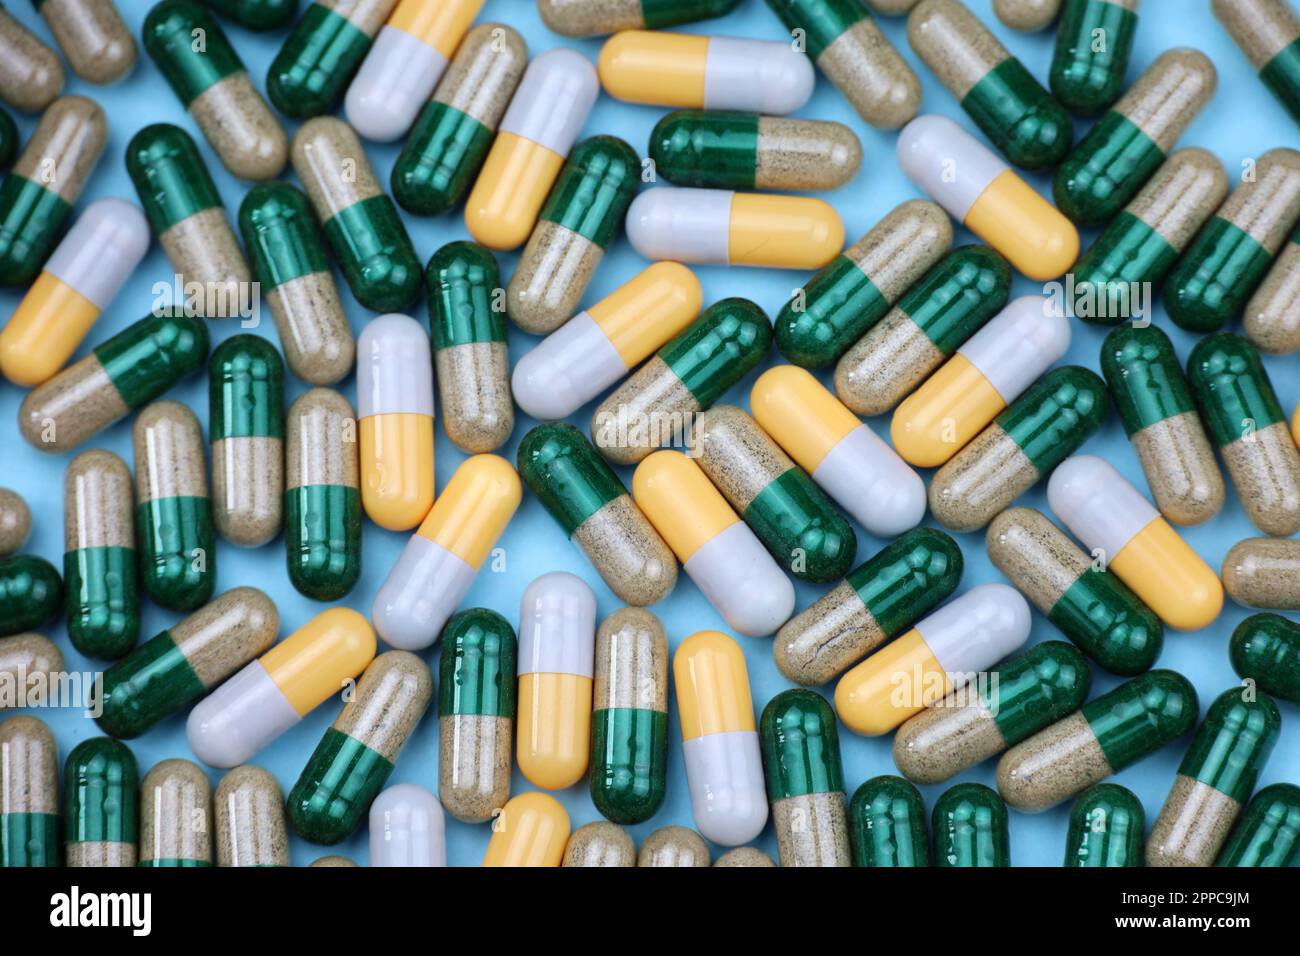 Píldoras en cápsulas, variación de la medicación dispersa sobre fondo azul. Farmacia, antibióticos, vitaminas Foto de stock